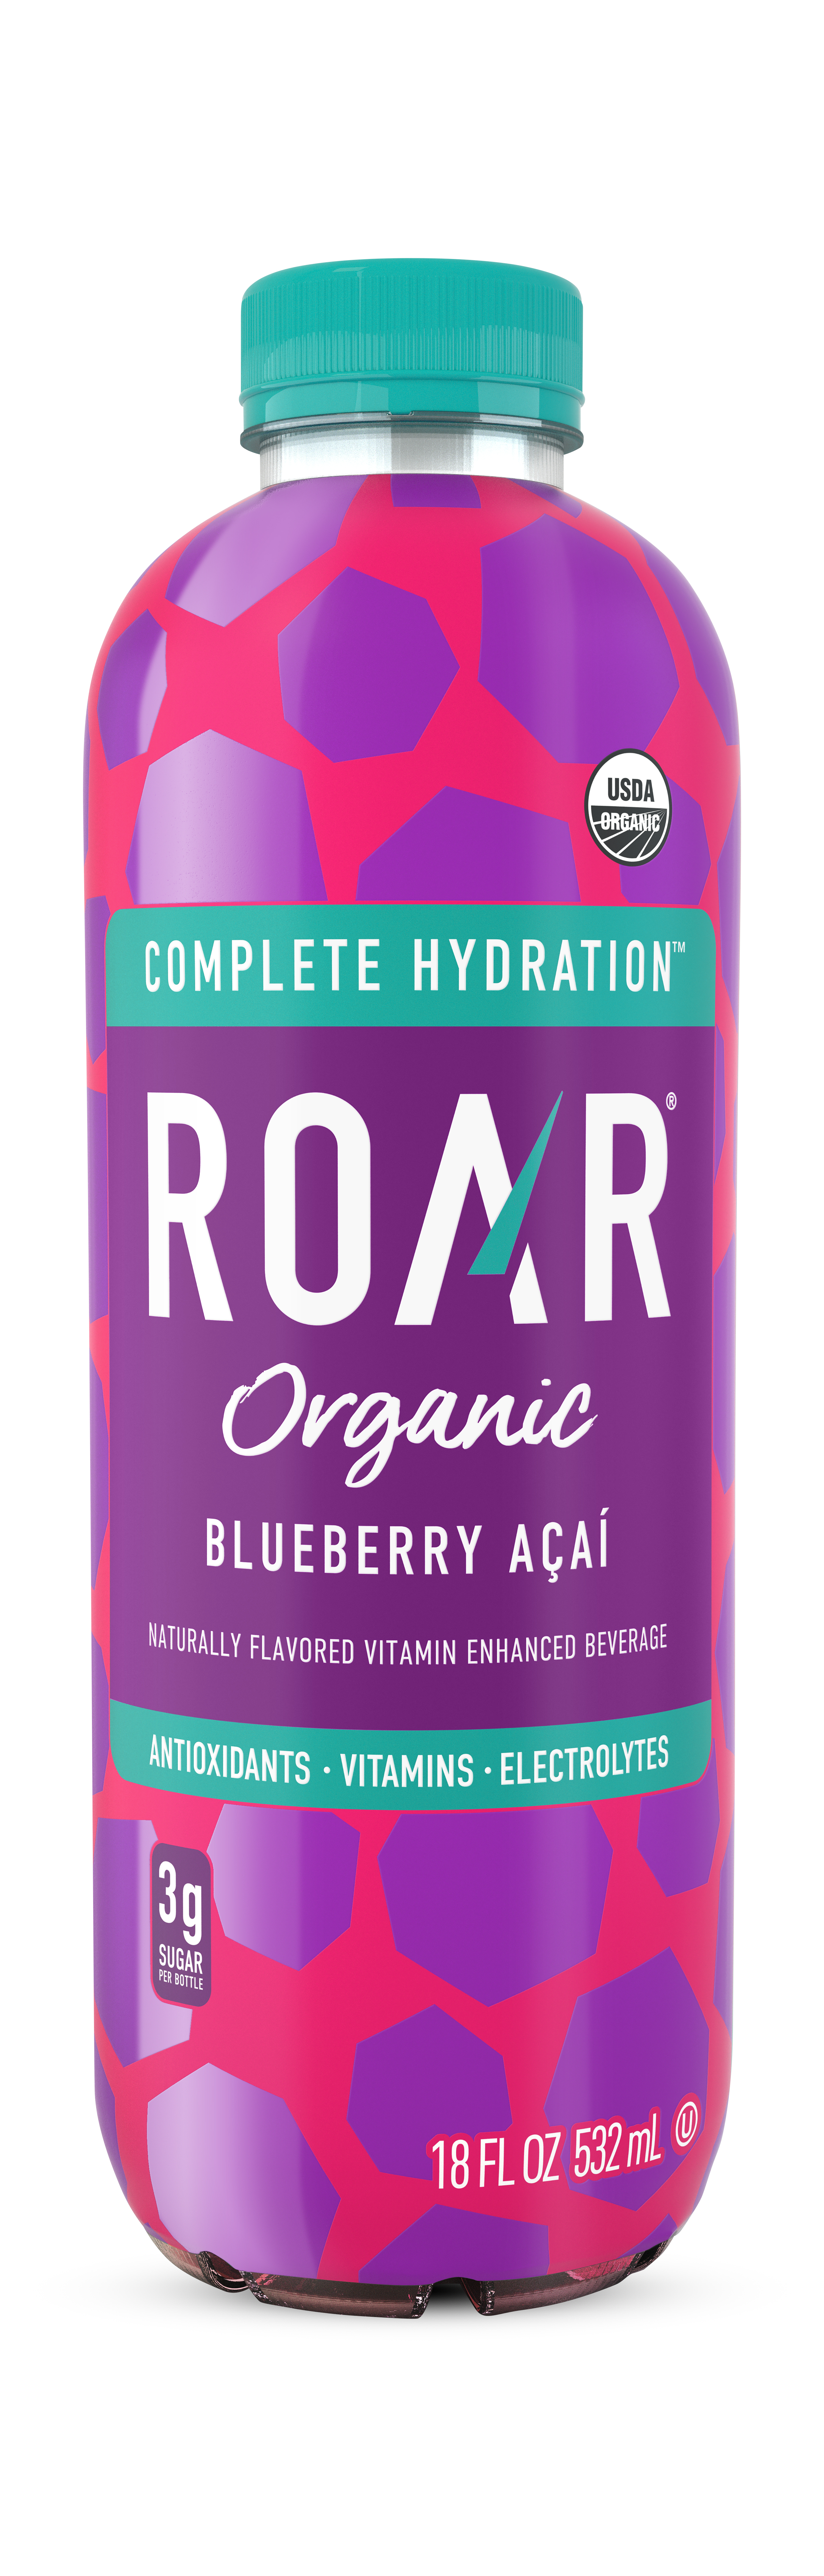 Roar Organic Blueberry Acai 1 units per case 18.0 oz